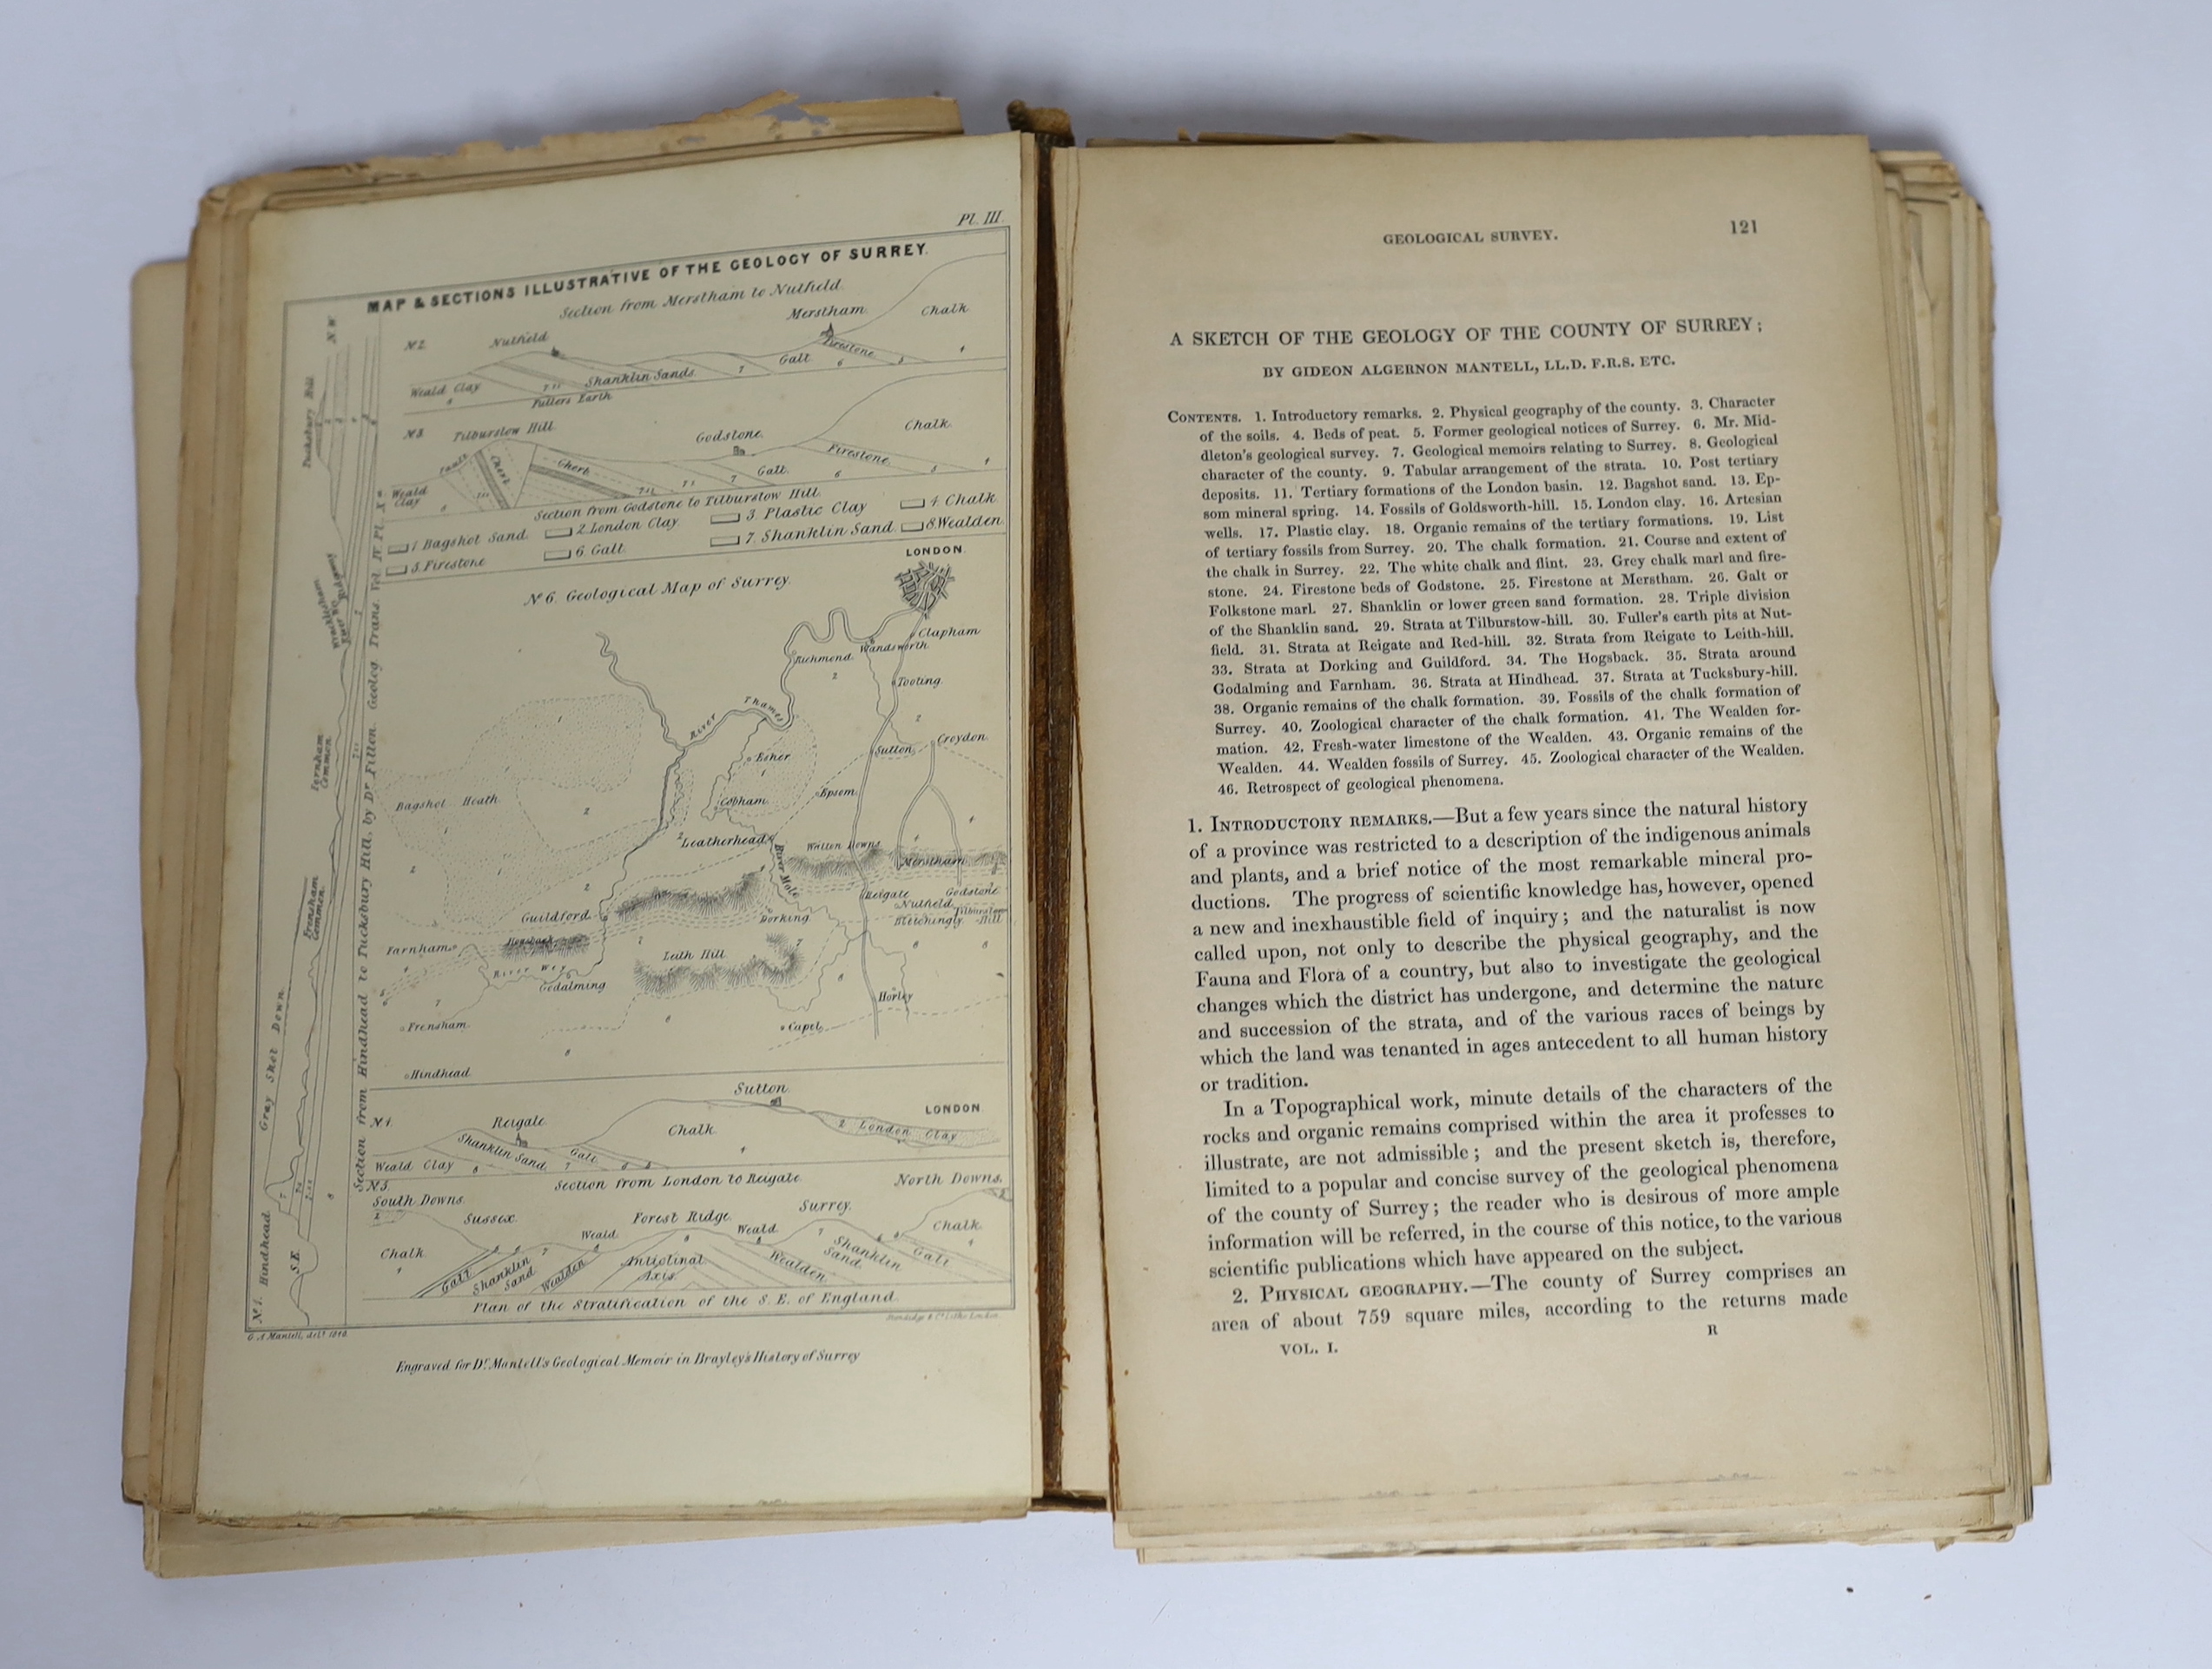 Edward Wedlake Bradley, Gideon Marshall - Topographical History of Surrey - Geological series. 5 Vols, published 1851. Half calf